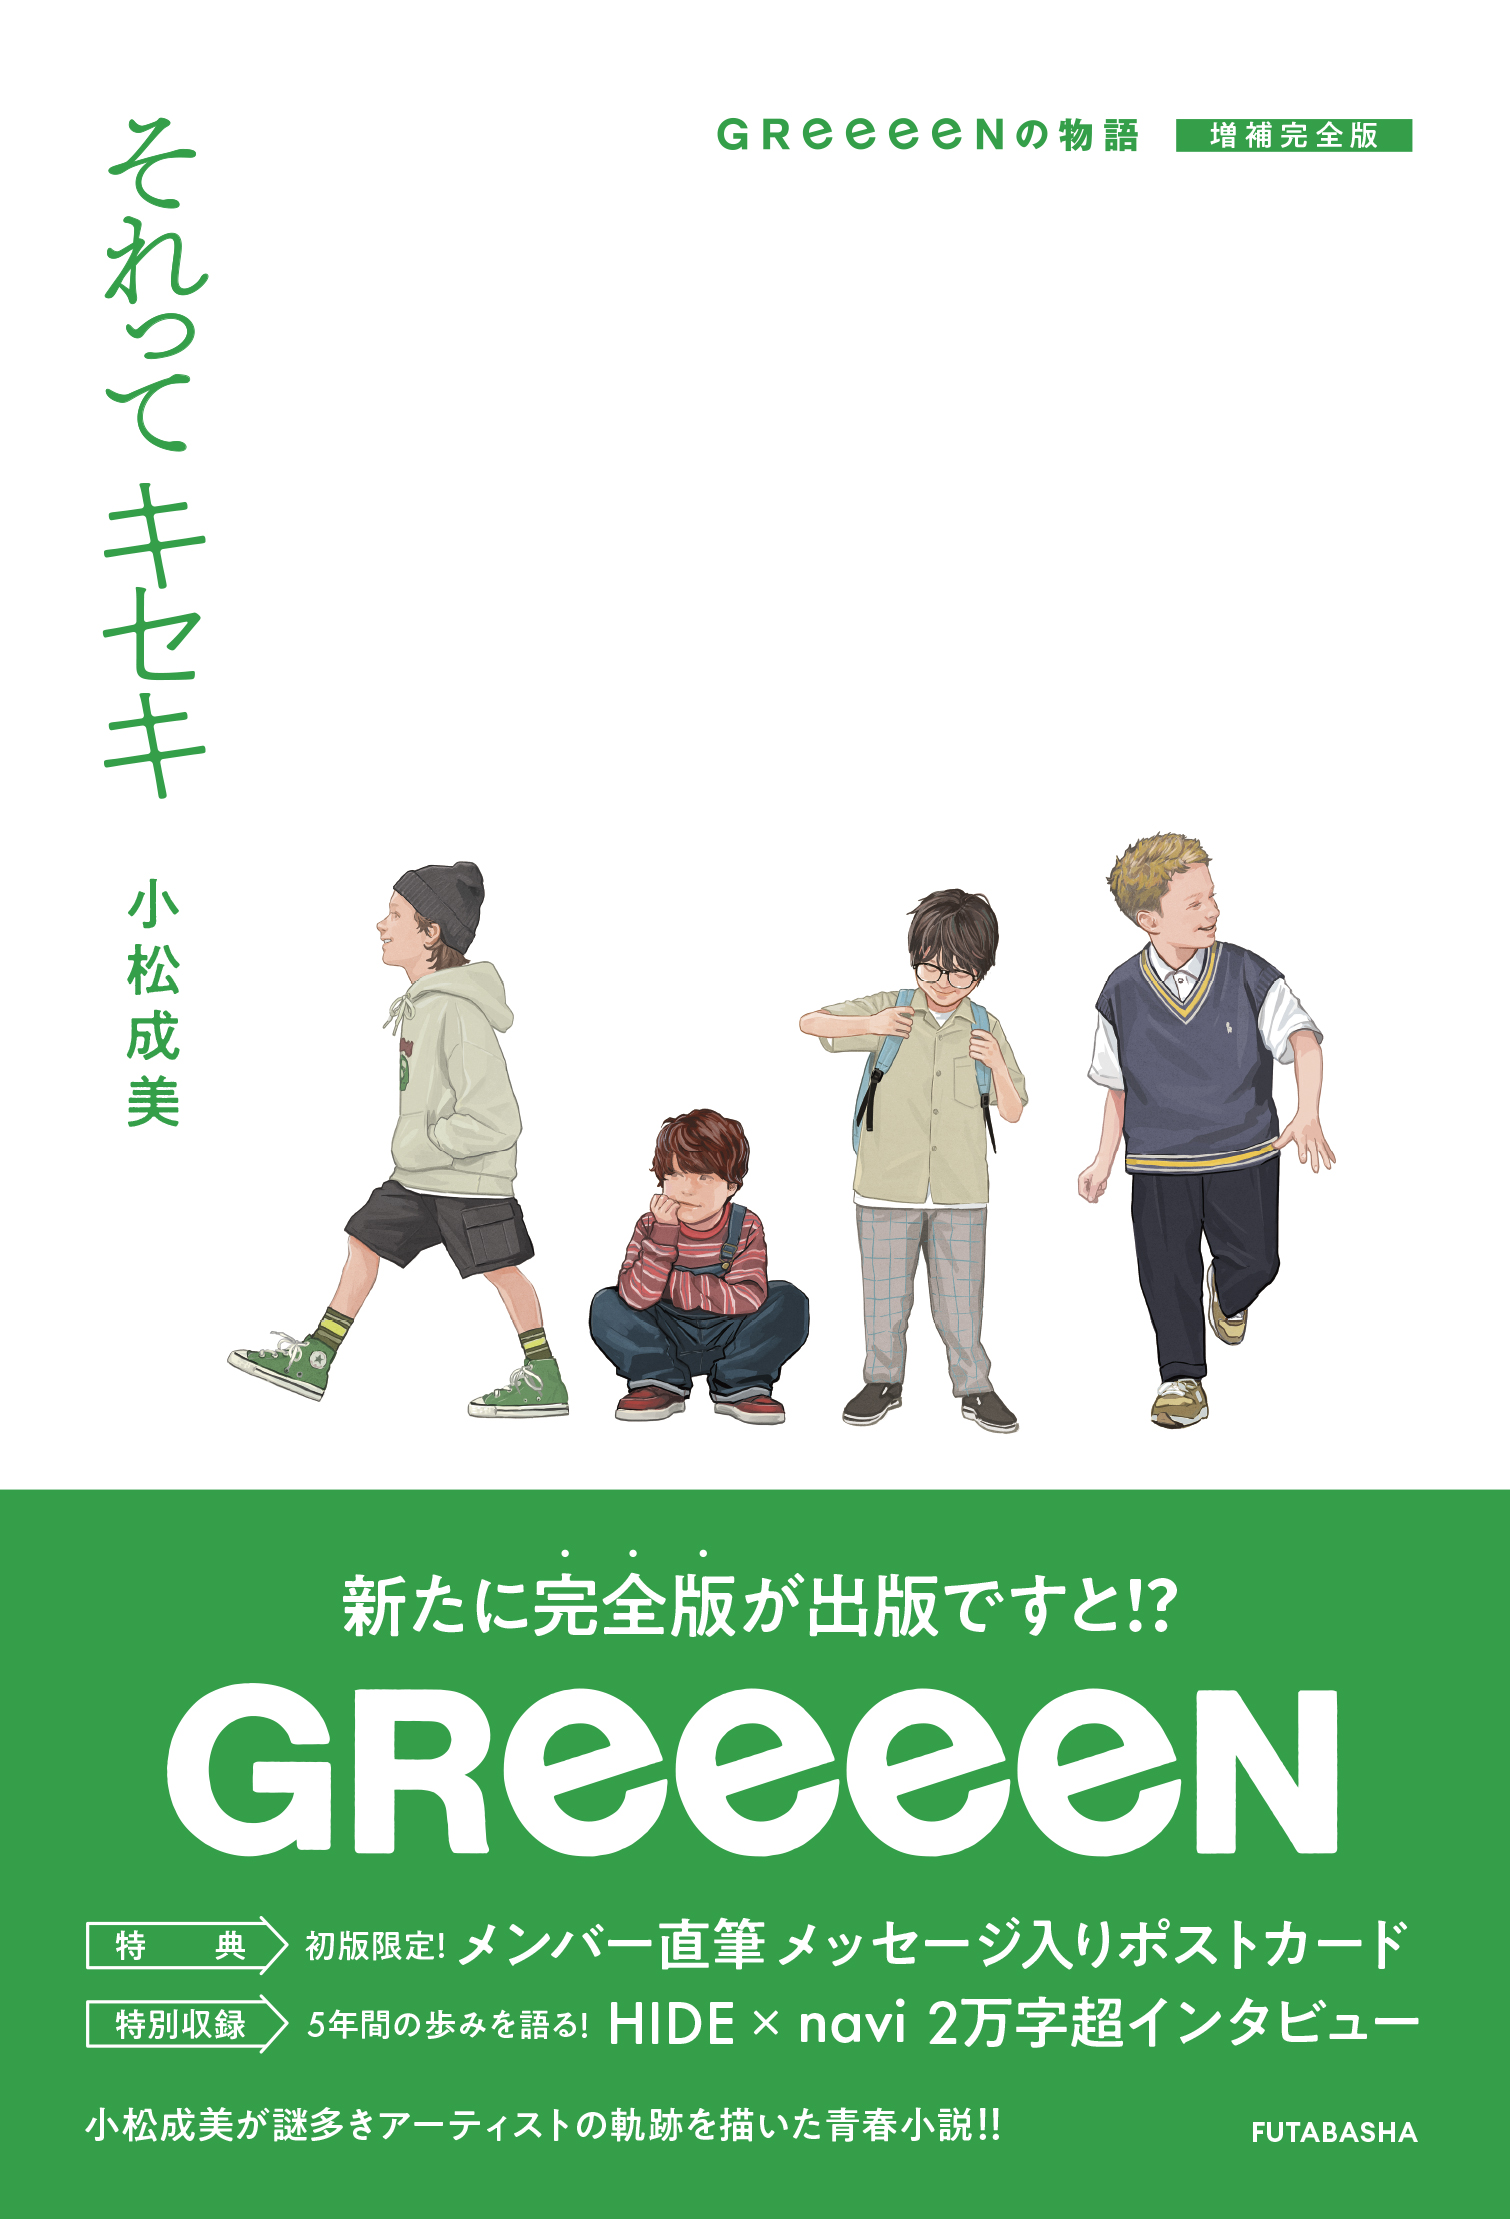 GReeeeN HIDE メンバーデザイン タオル - 通販 - gofukuyasan.com